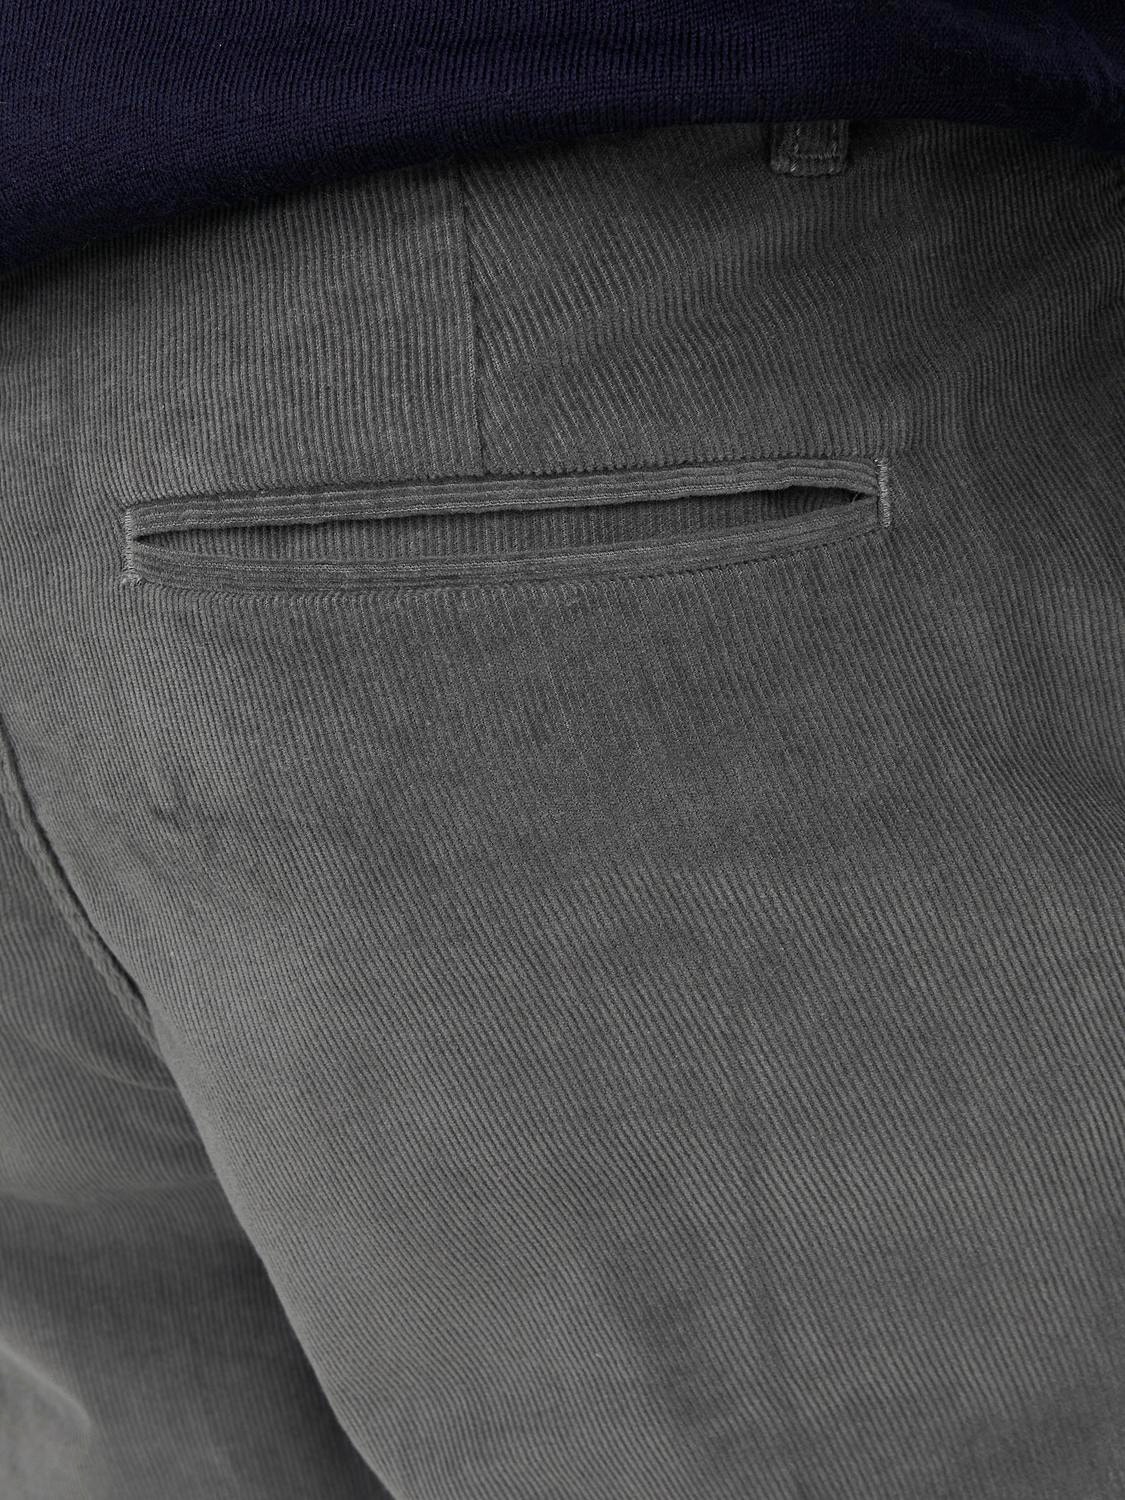 Jack & Jones Loose Fit Spodnie chino -Sedona Sage - 12237547